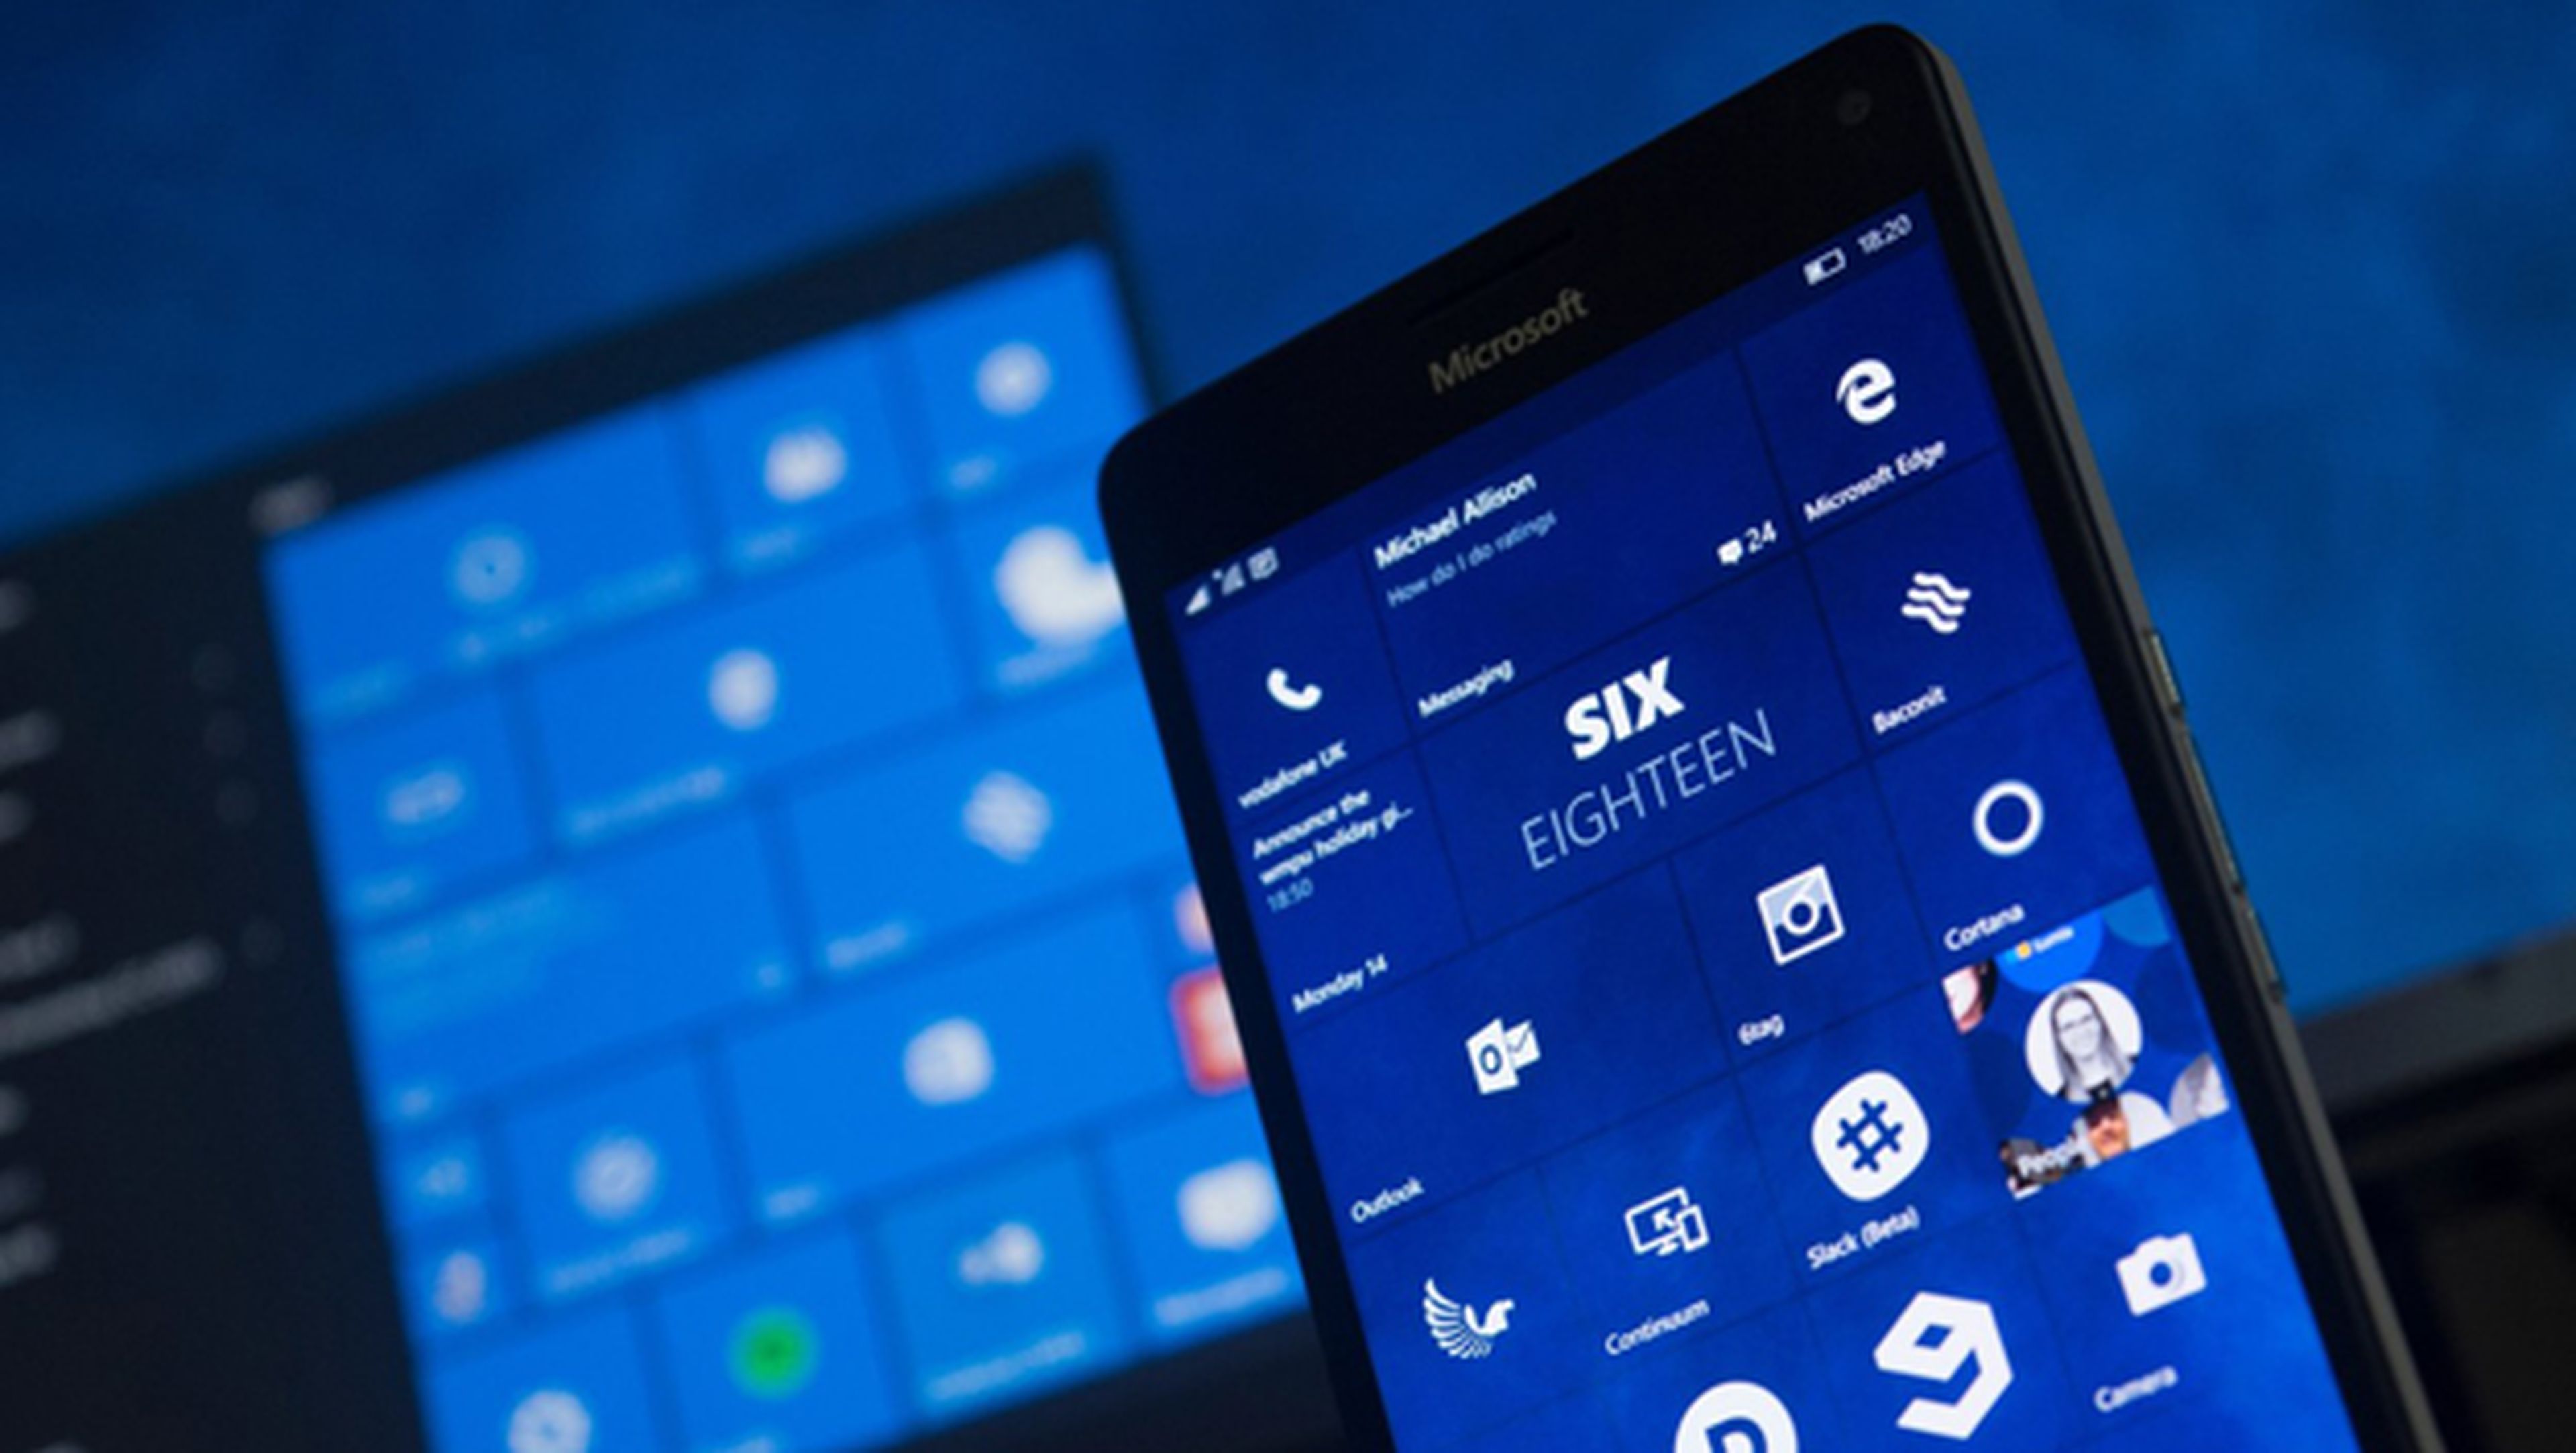 Windows 10 Mobile contará con soporte para lector de huellas dactilares